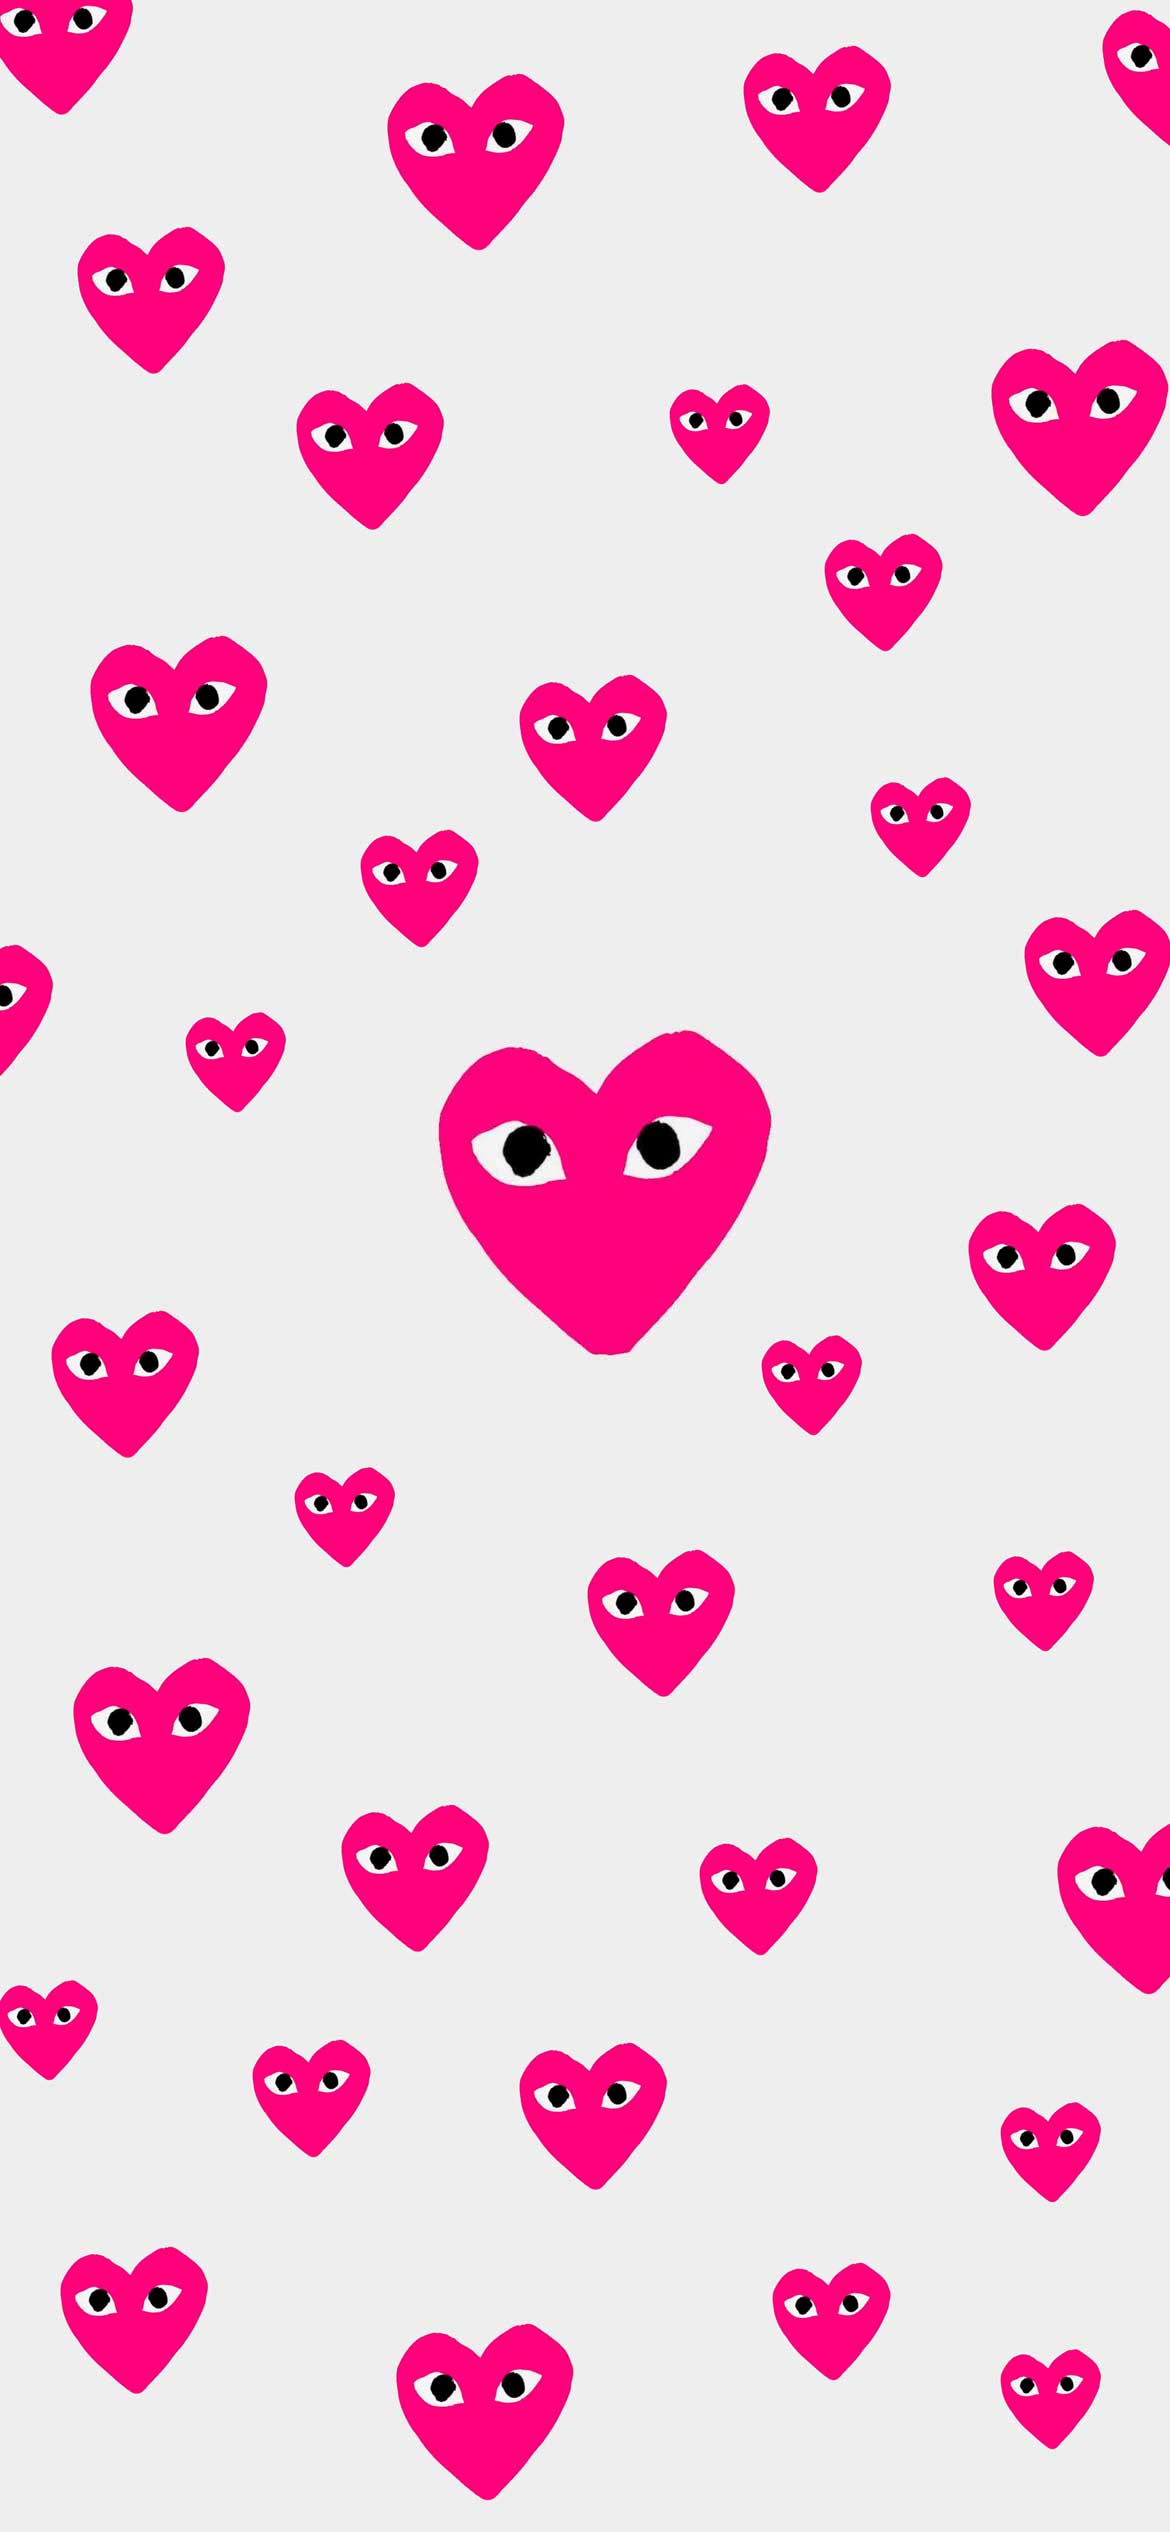 Share more than 58 converse heart wallpaper  incdgdbentre